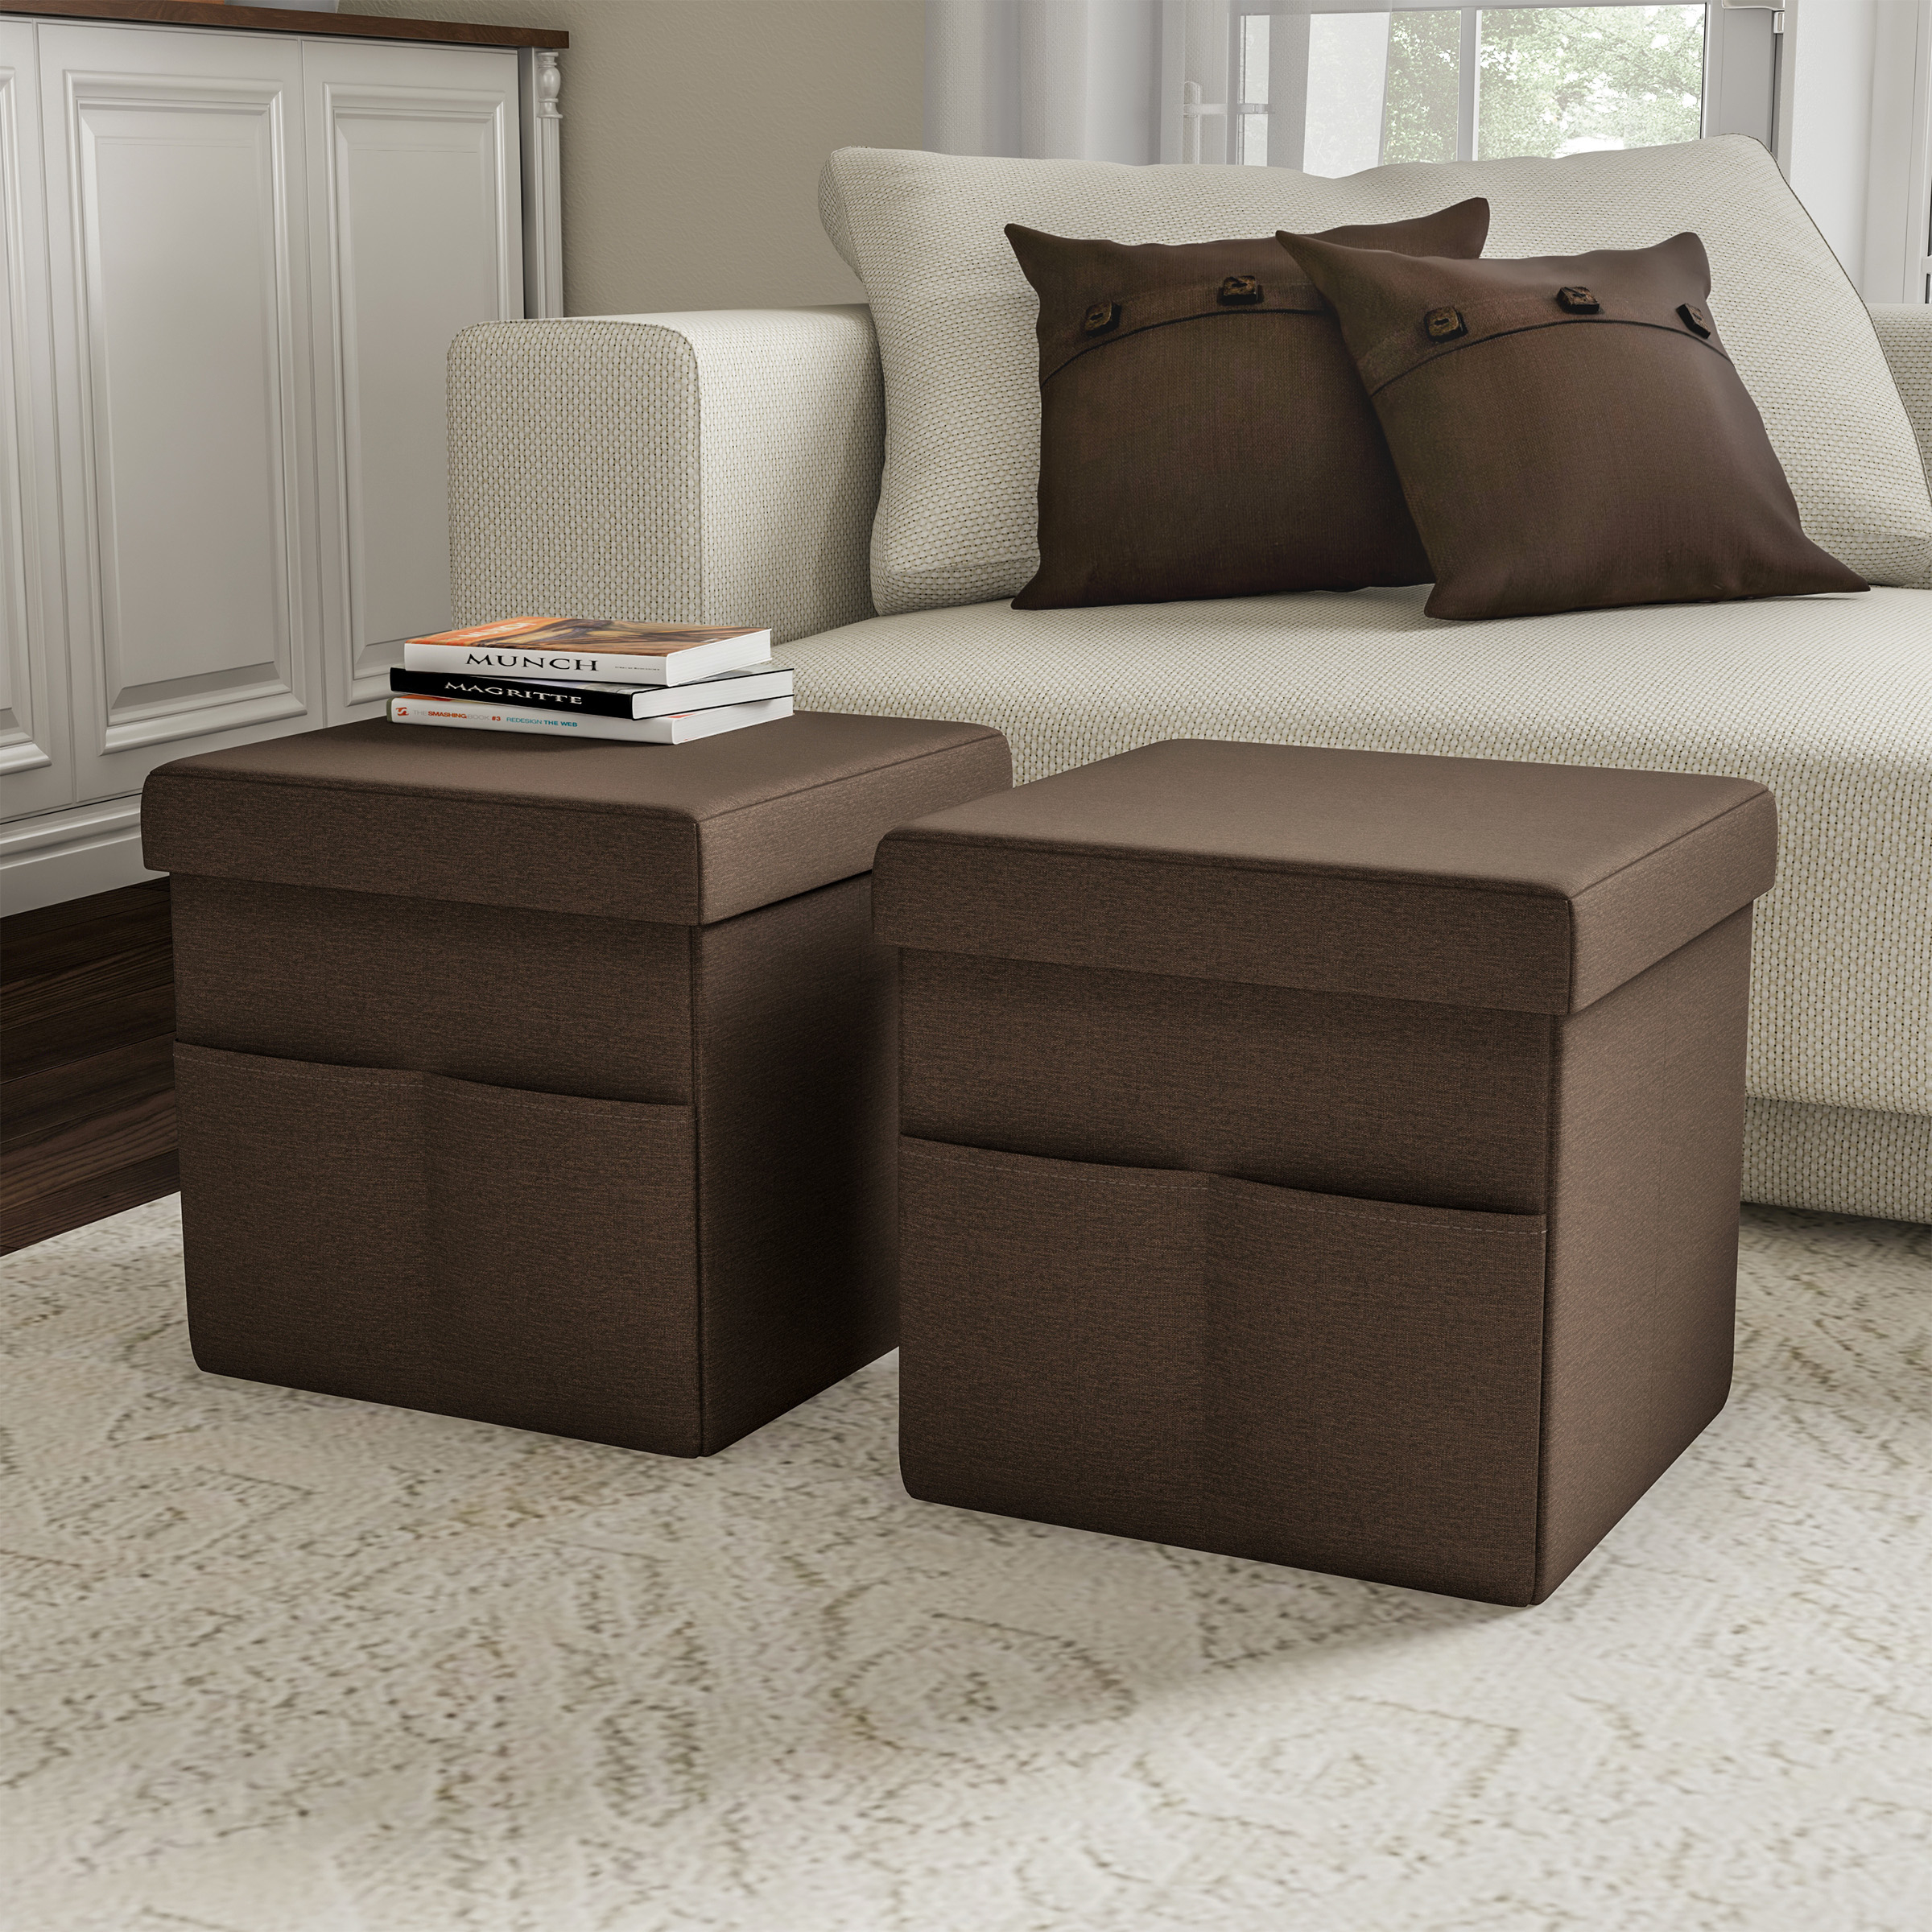 Foldable Storage Cube Ottoman With Pockets â Multipurpose Footrest Seat Organizer For Bedroom, Living Room, Dorm